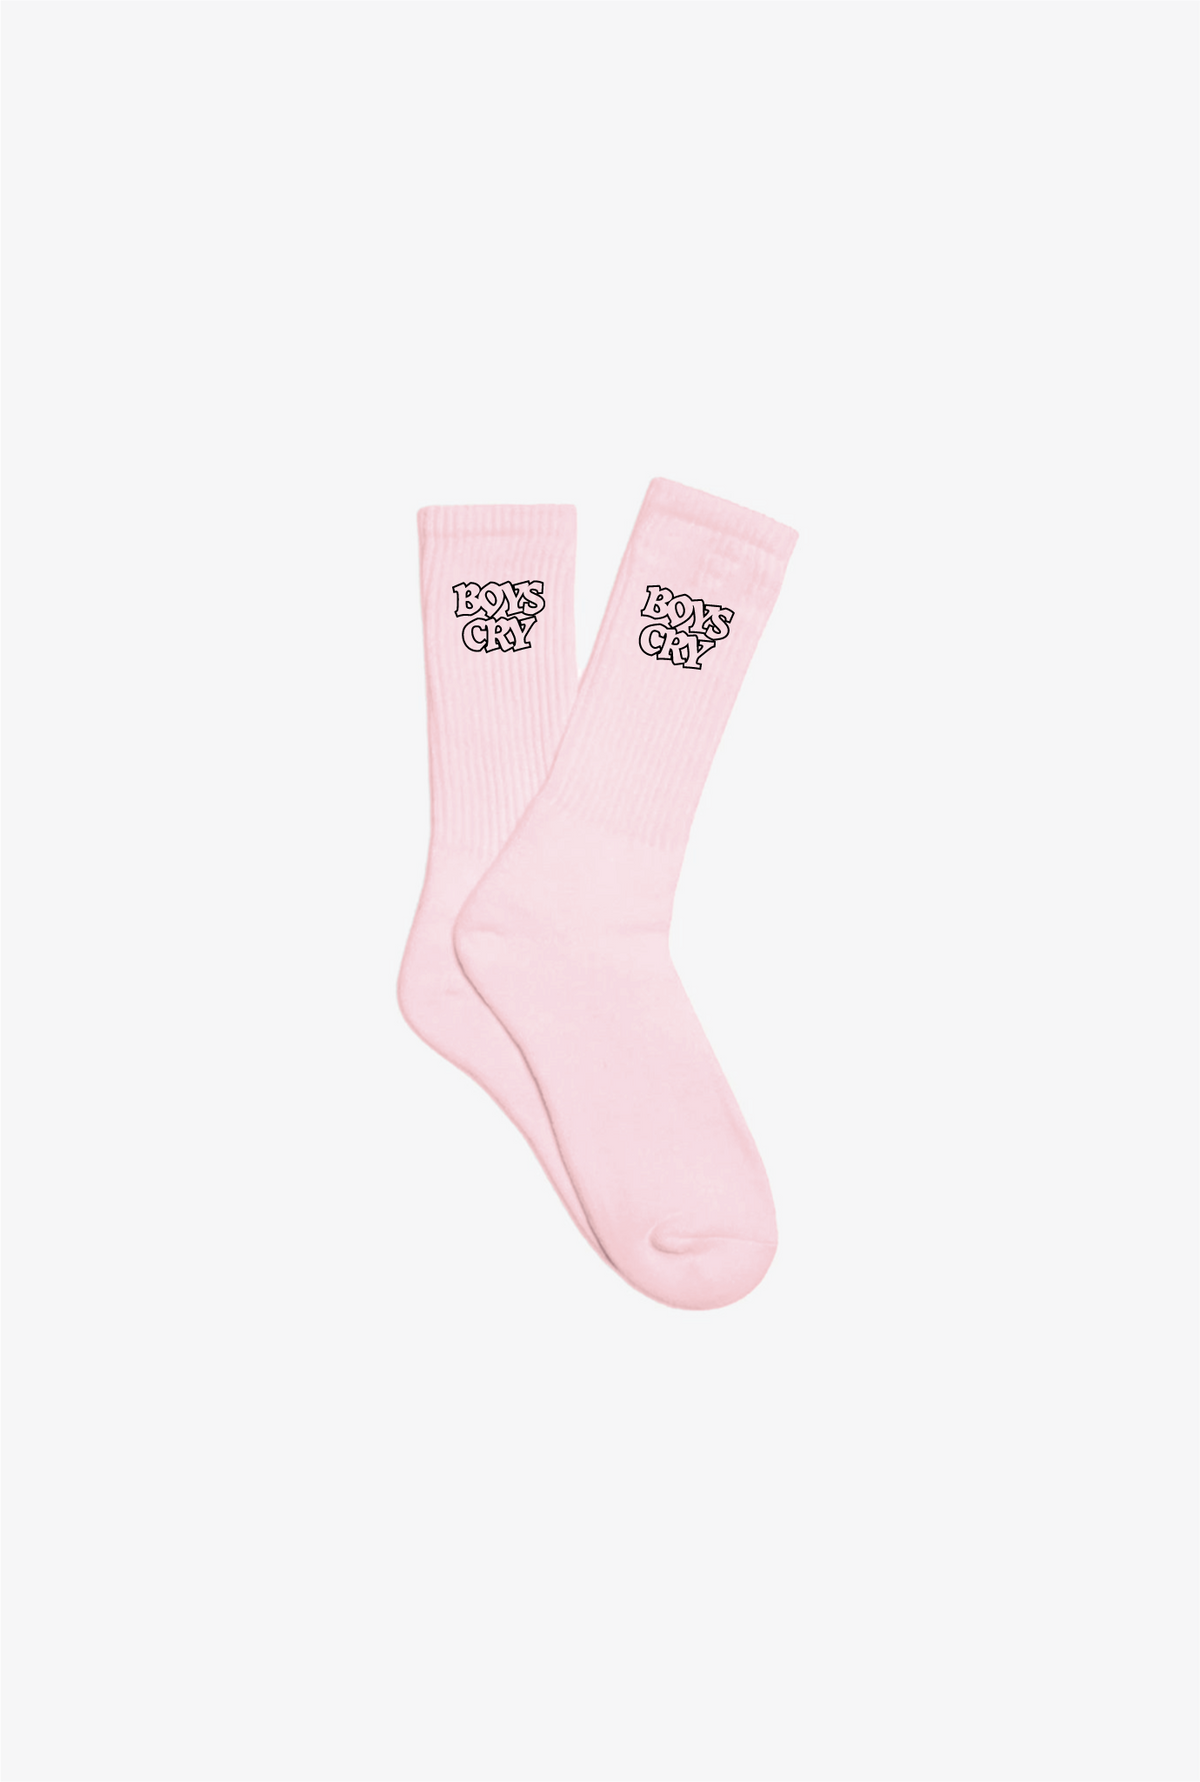 Boys Cry Socks - Pink